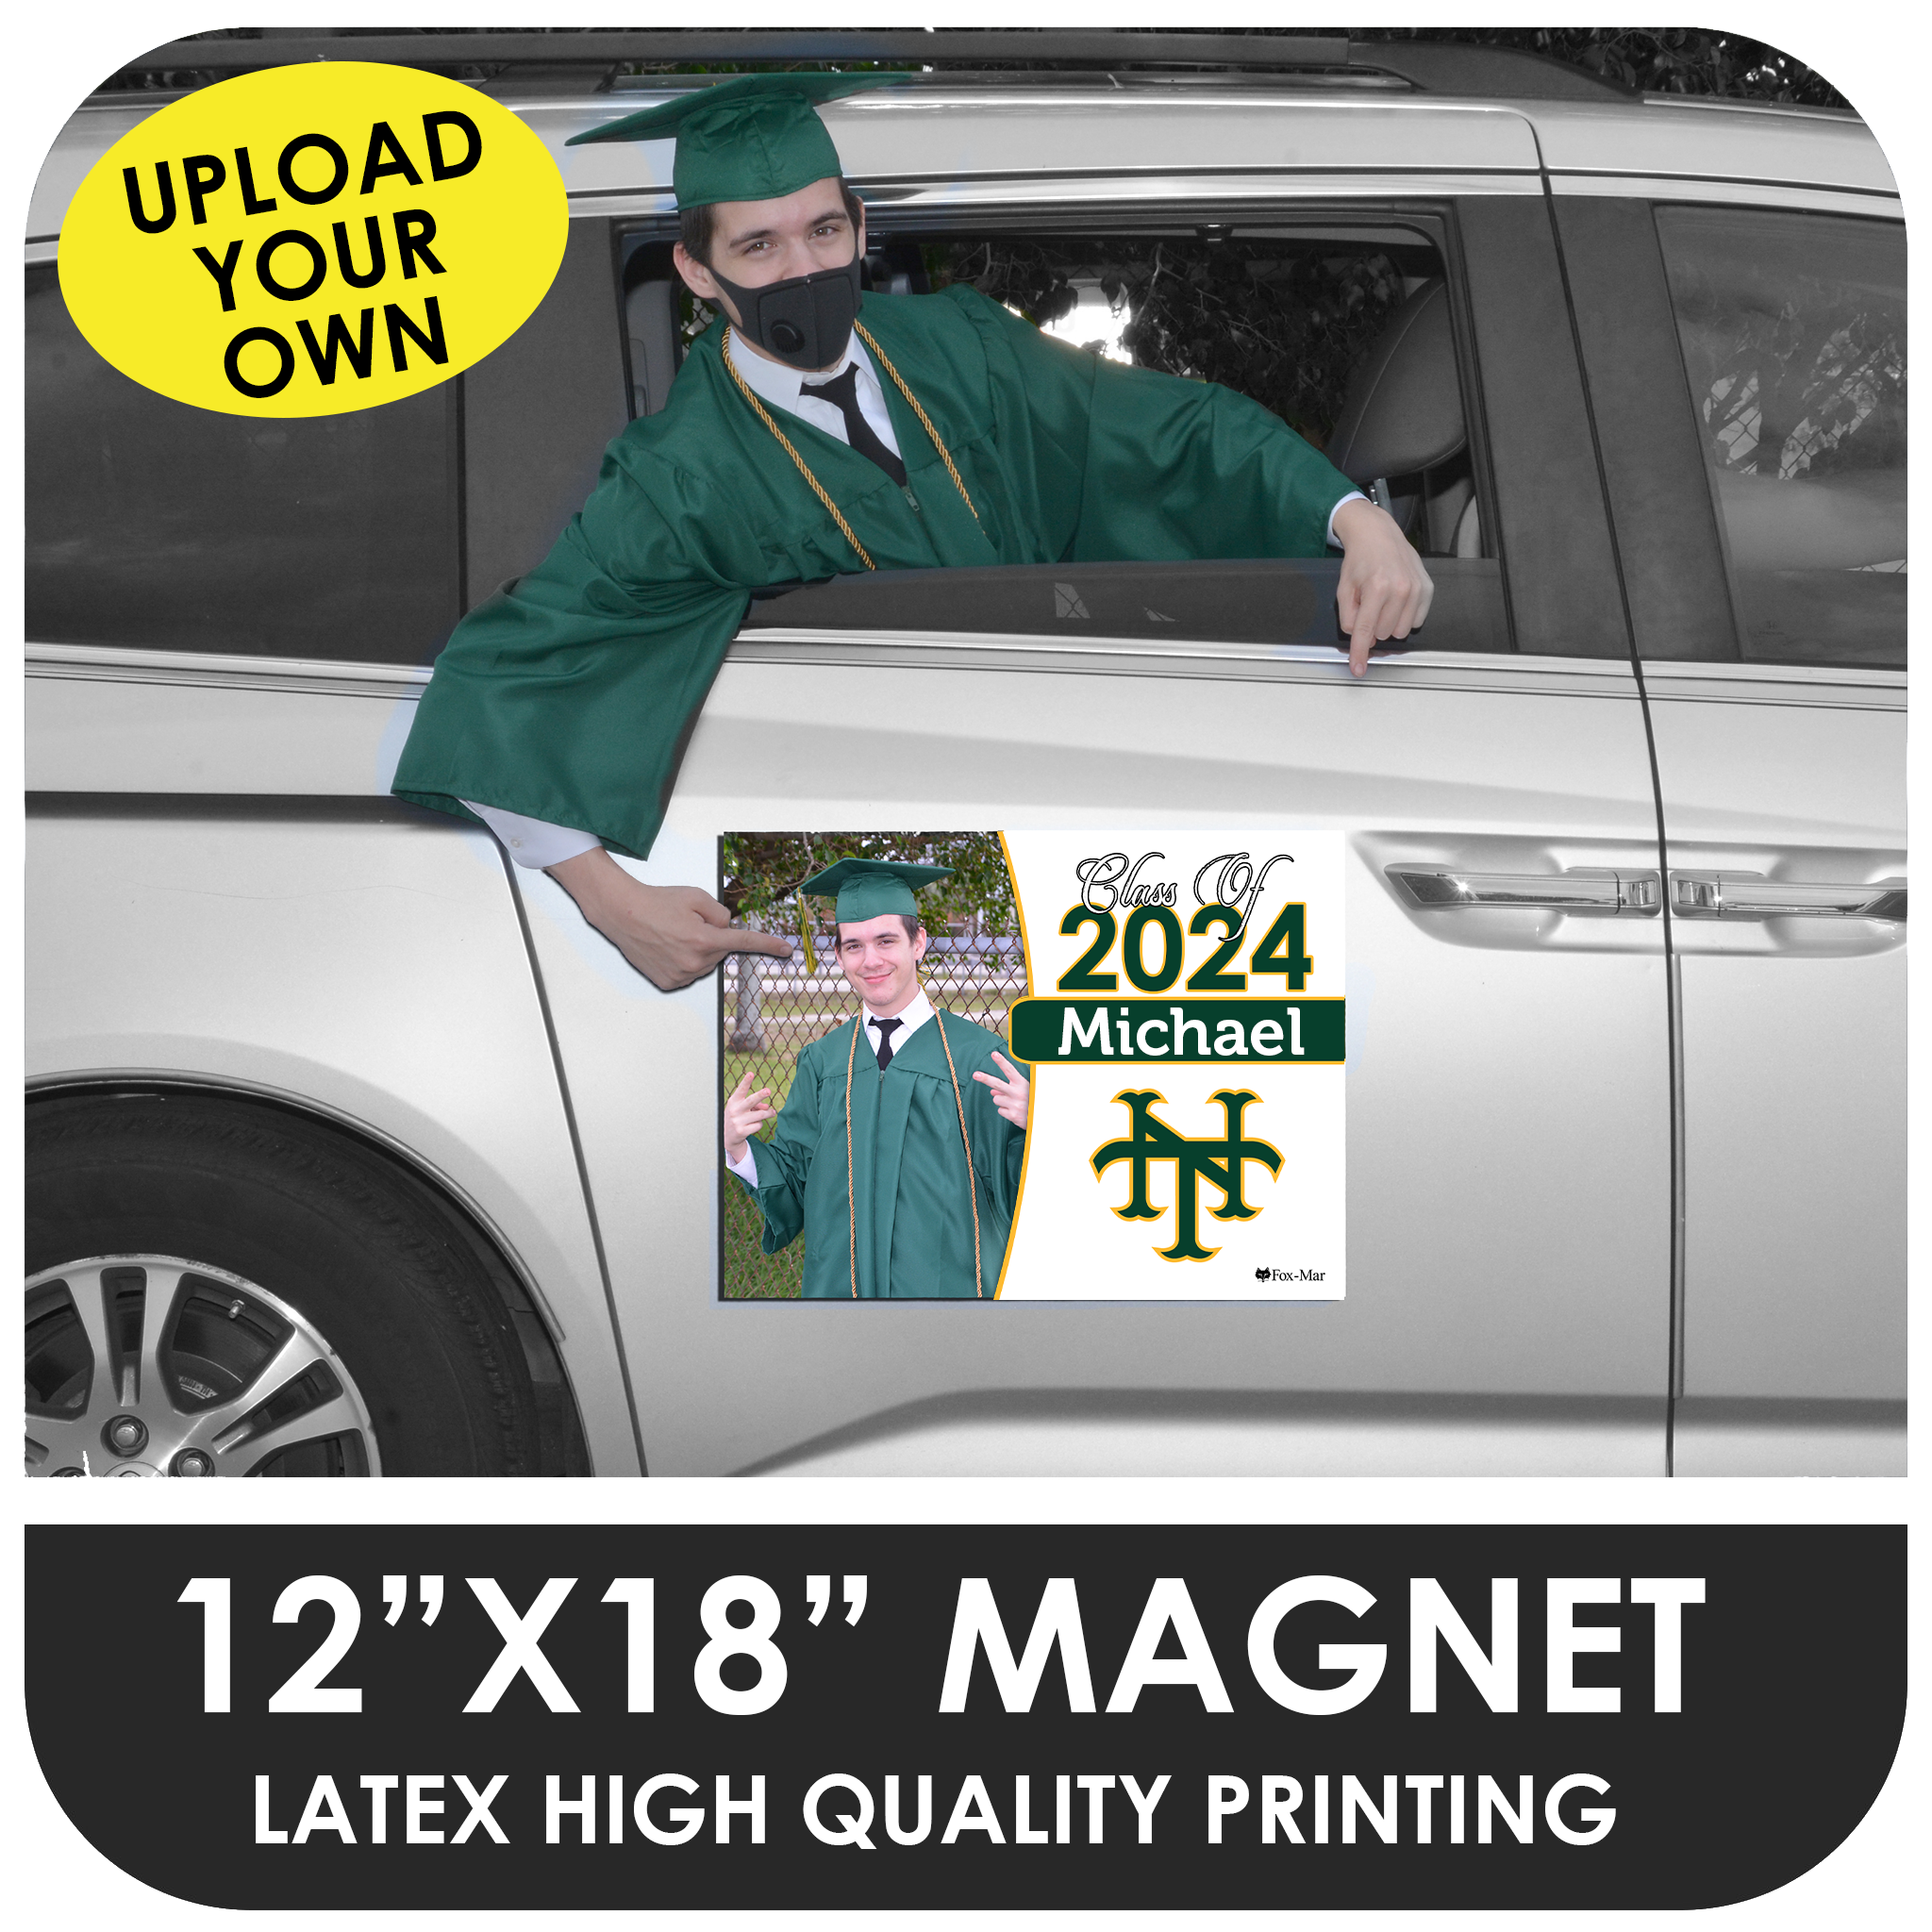 Upload Your Own Image - Car Magnet for Graduation Parades